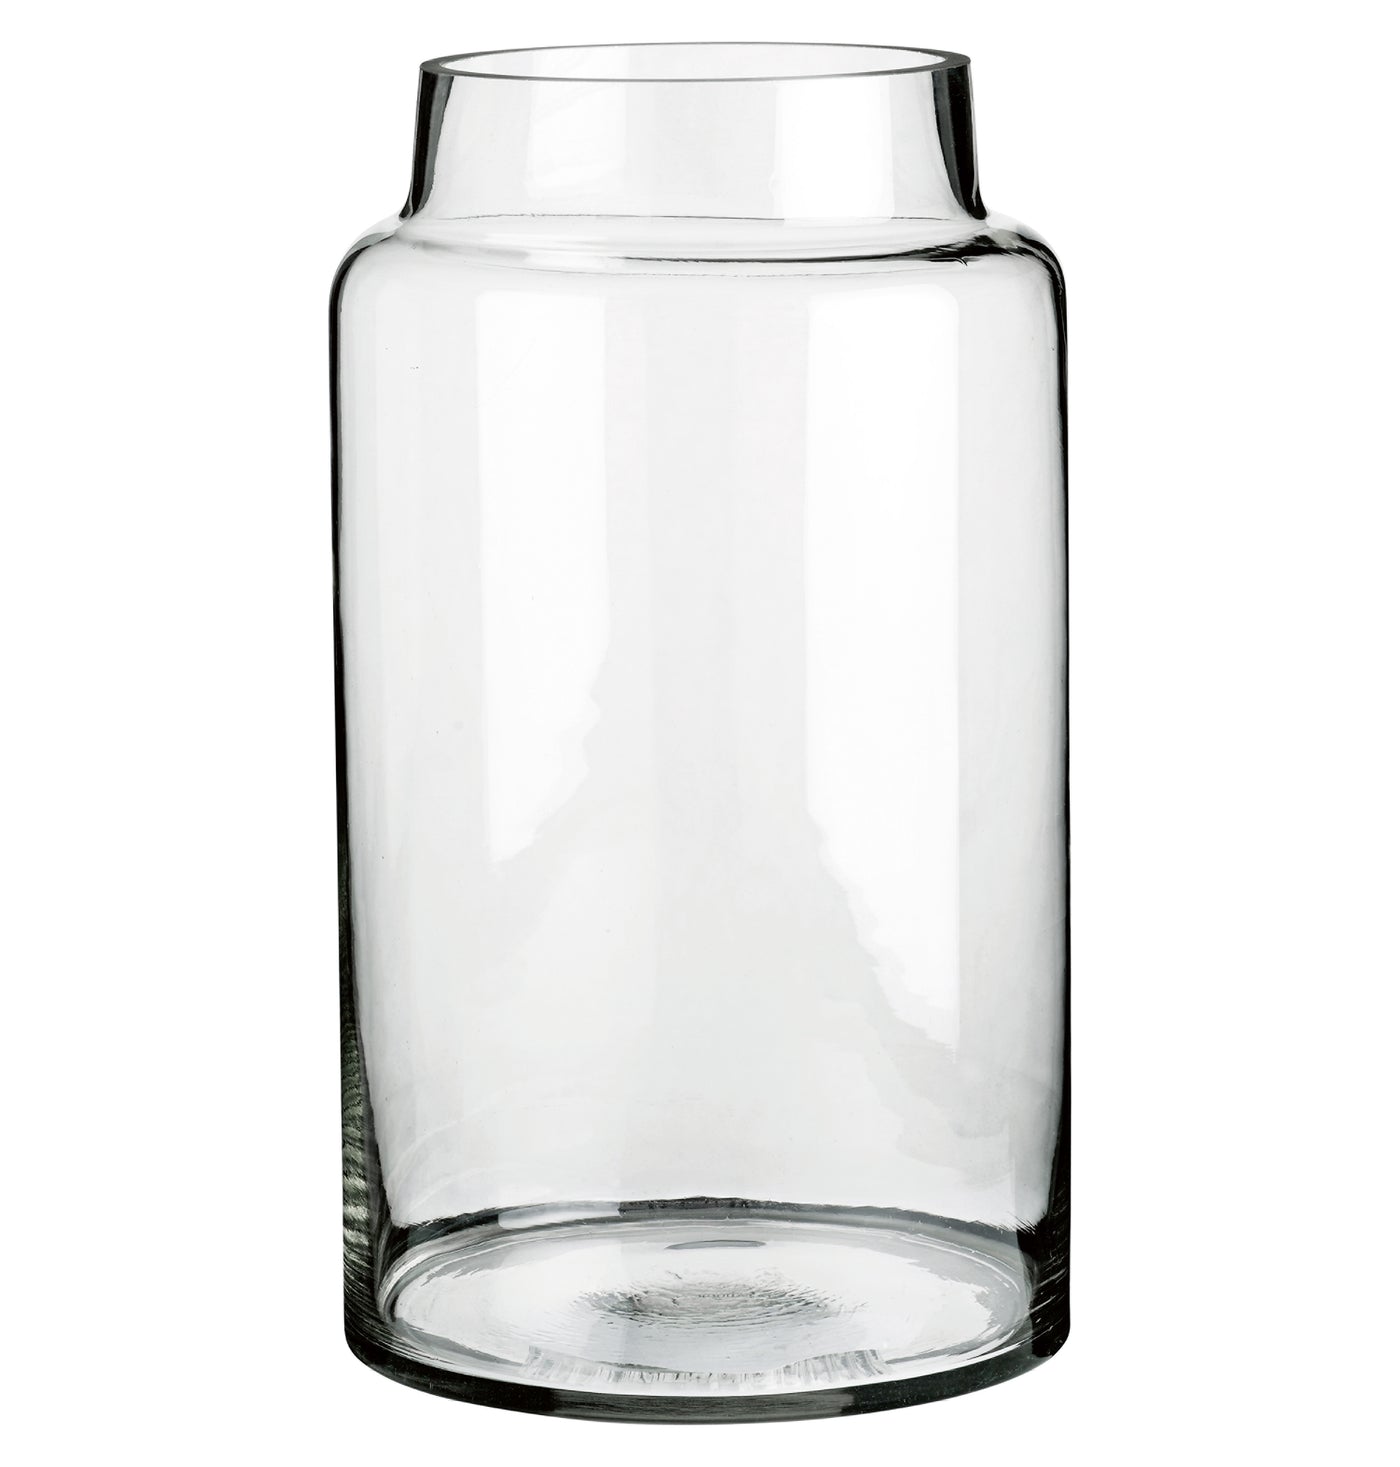 TF Glas Vase Large